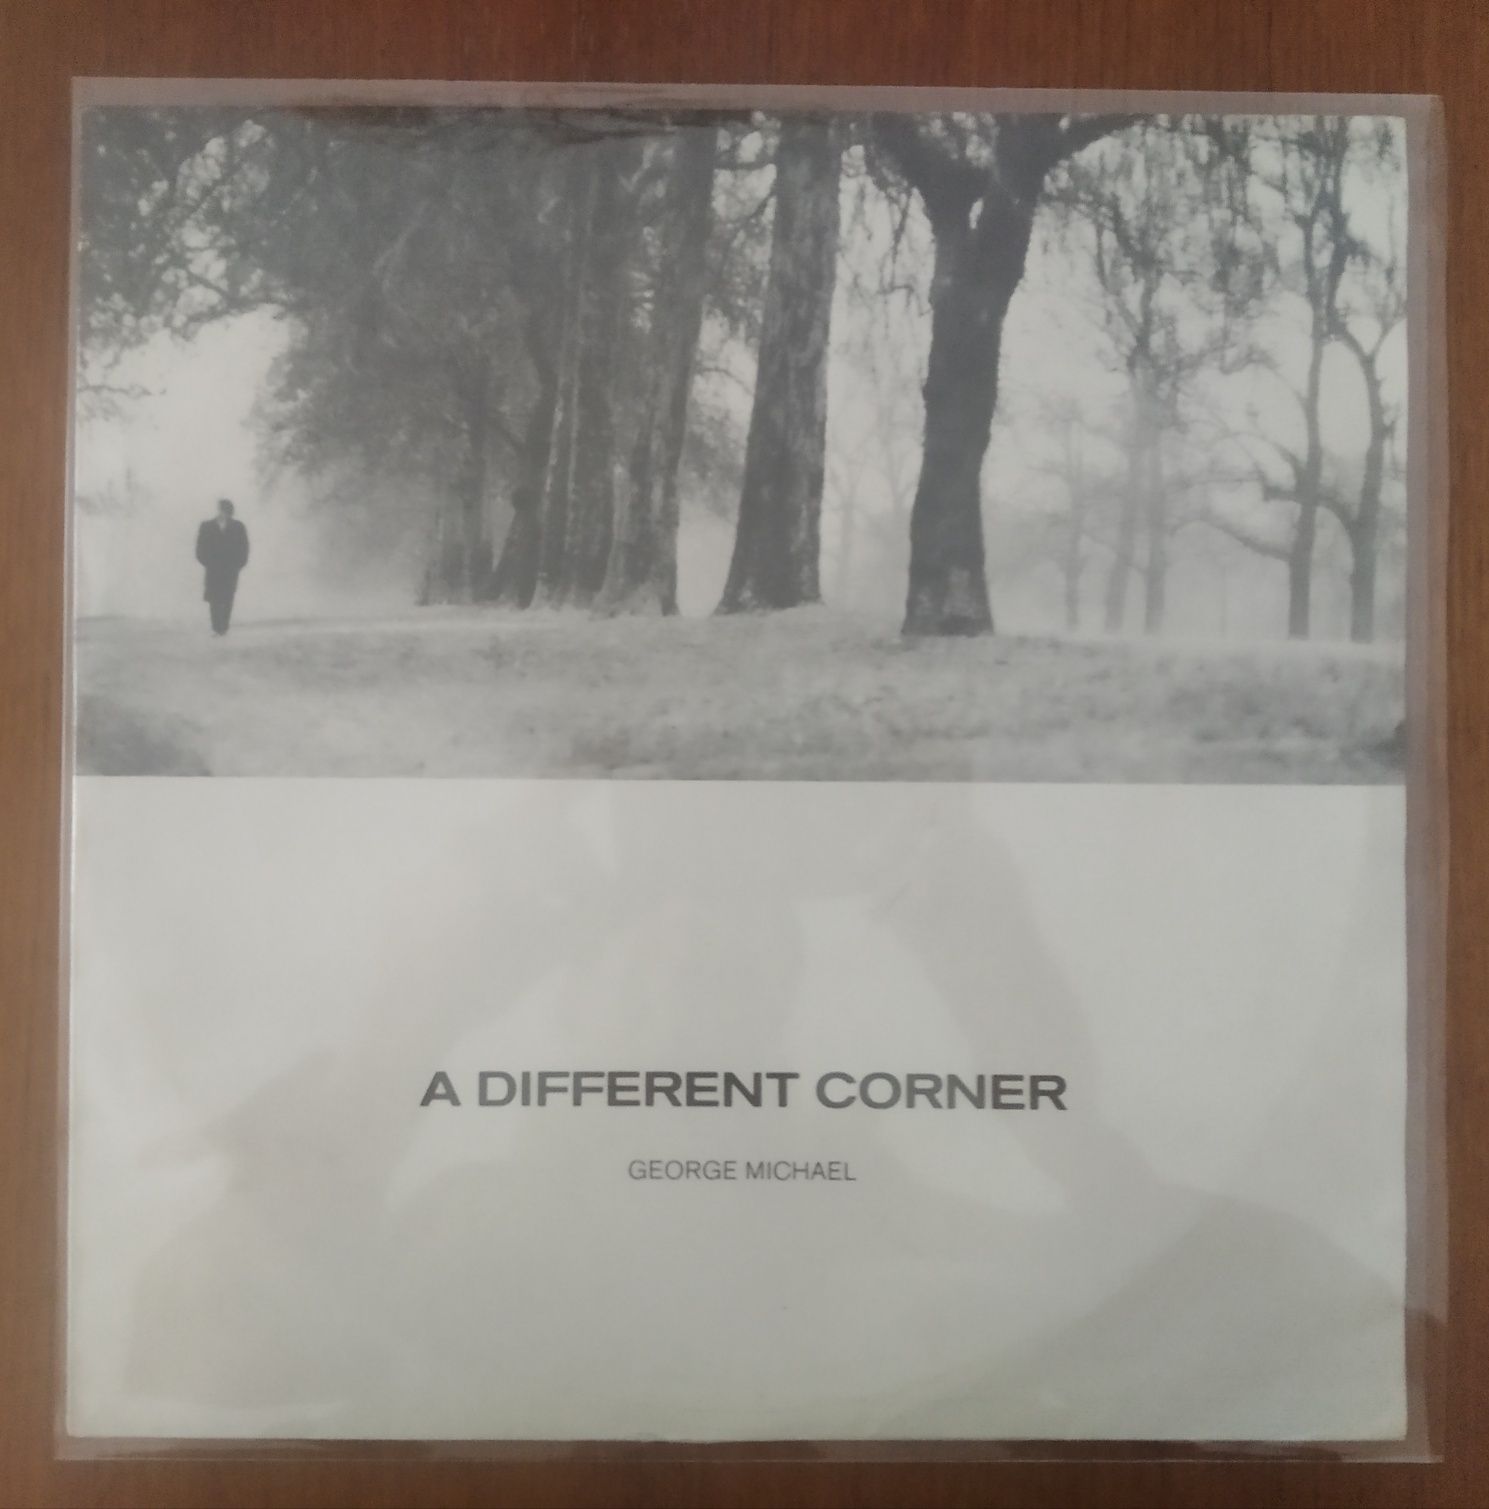 George Michael Maxi single de vinil "A Different Corner"